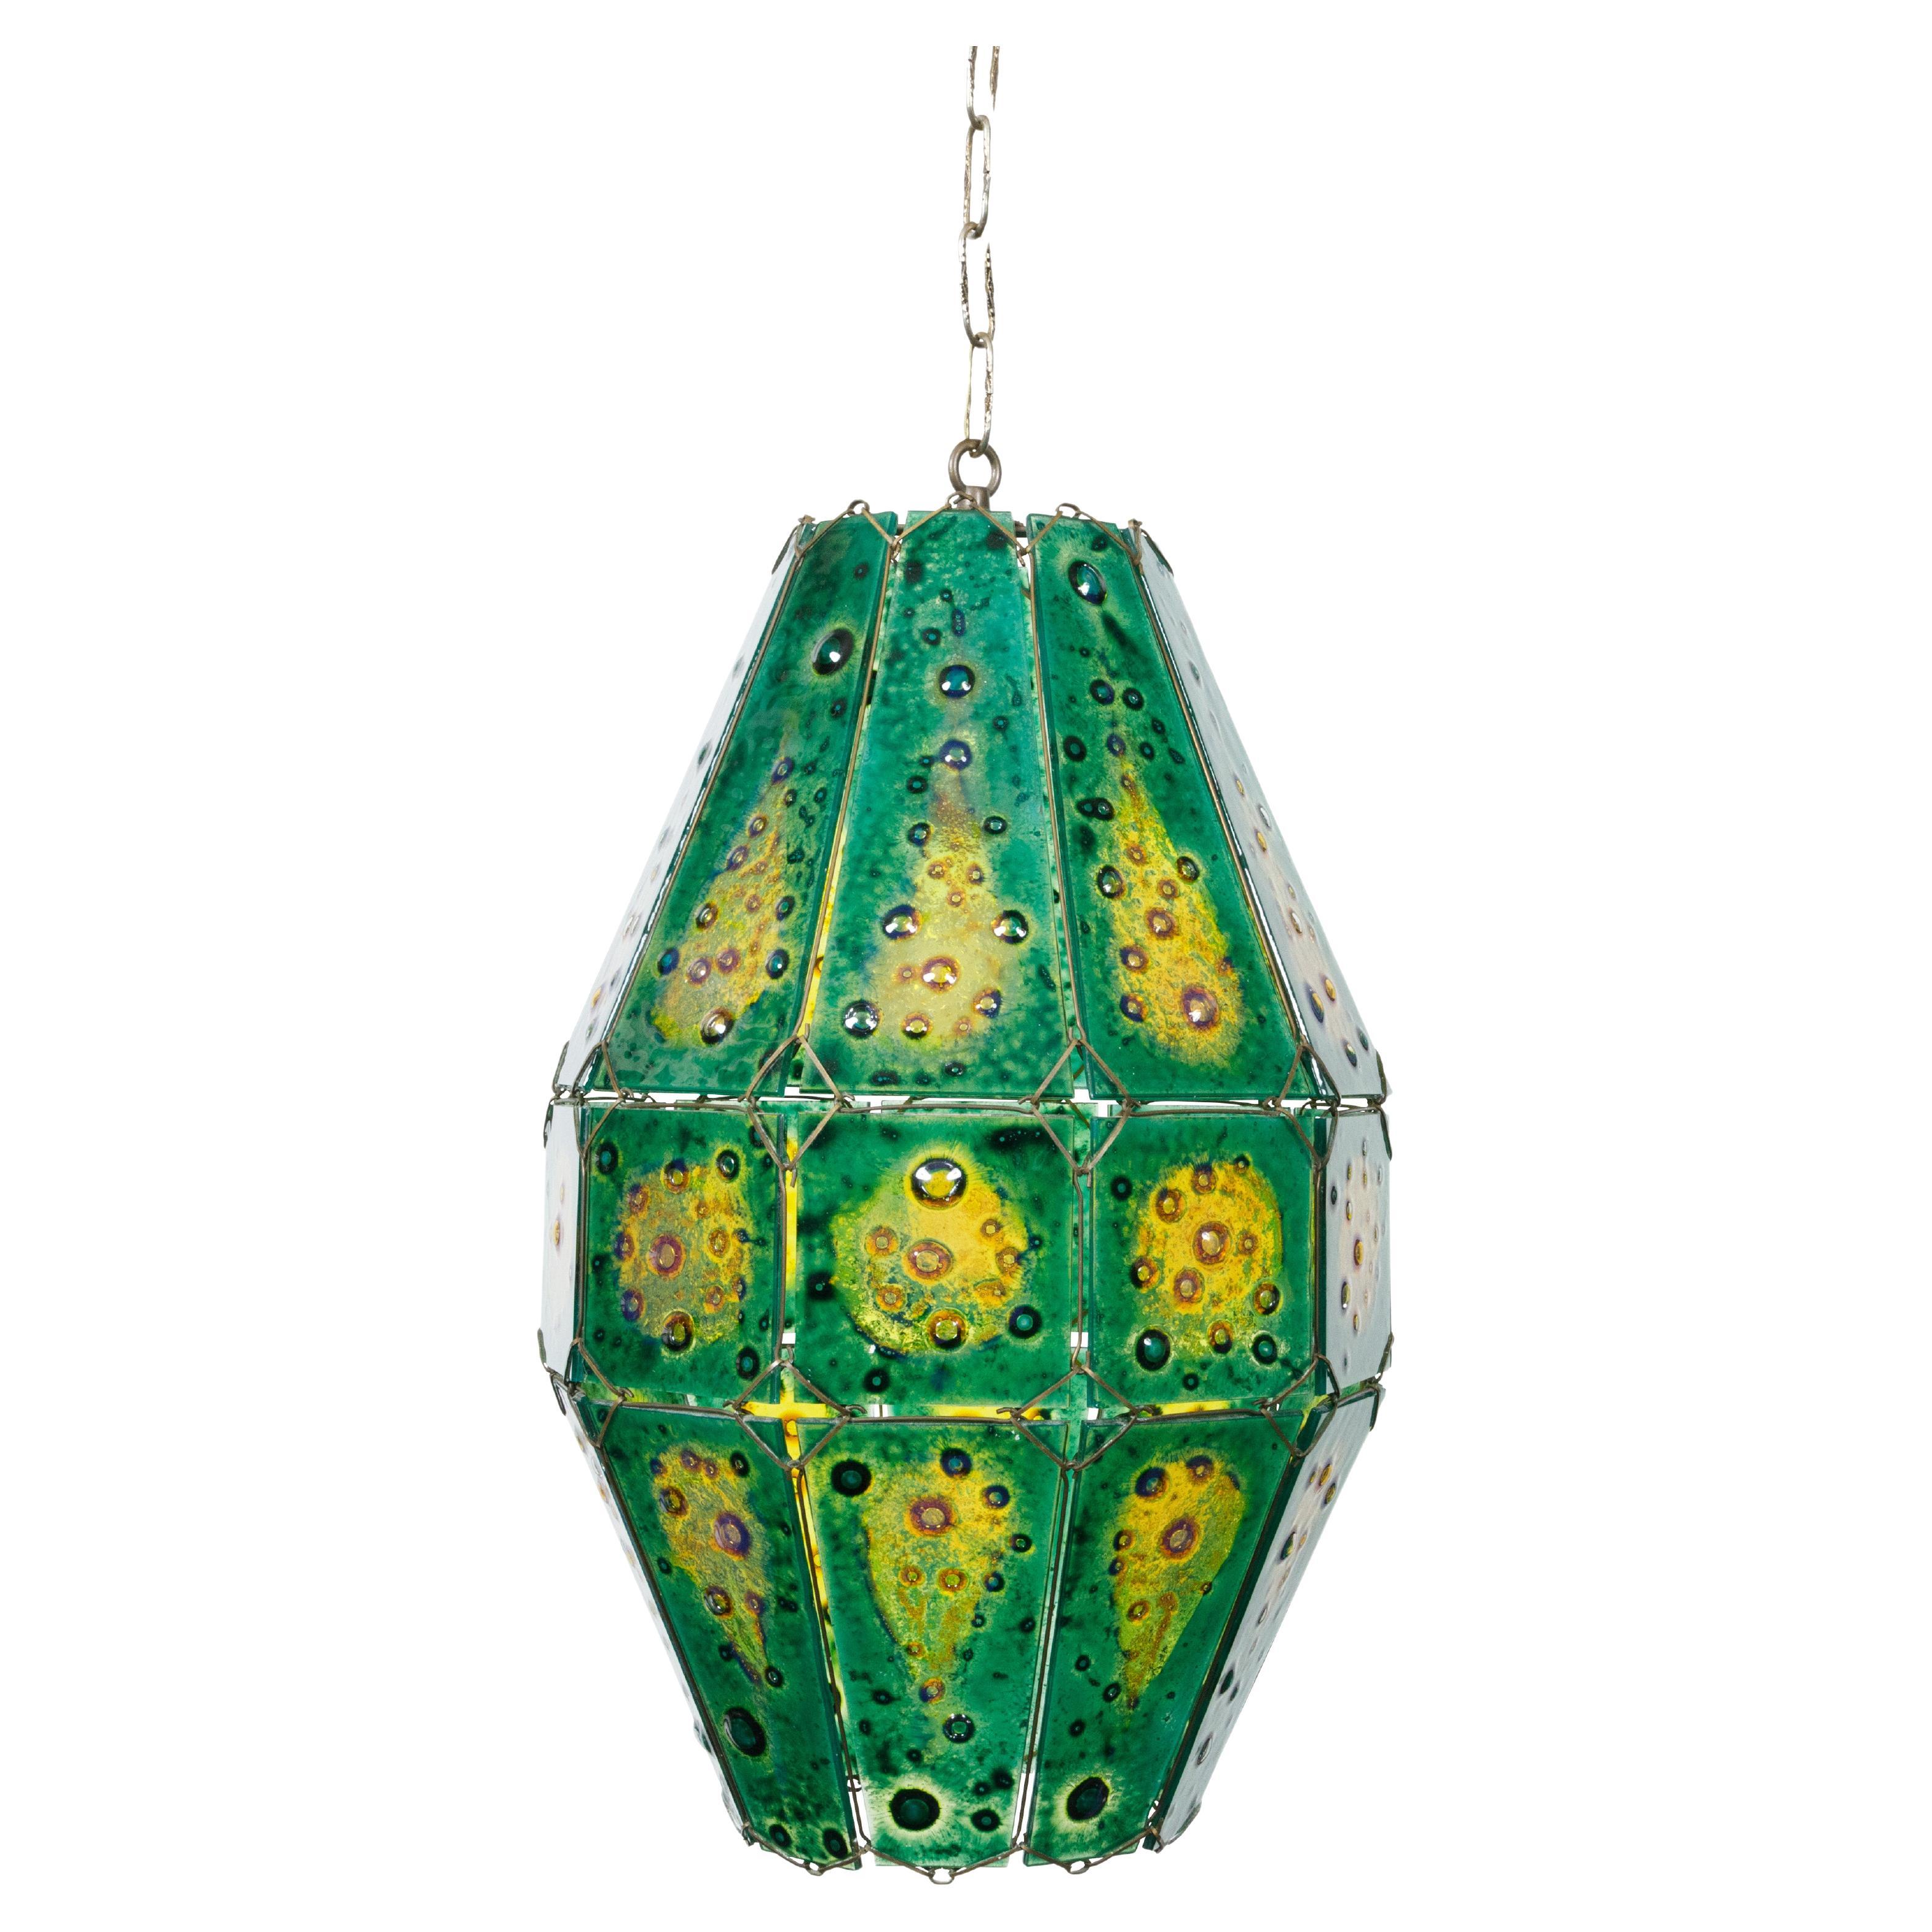 Felipe Derflingher Art Glass Pendant Light Fixture with Green and Yellow Tones